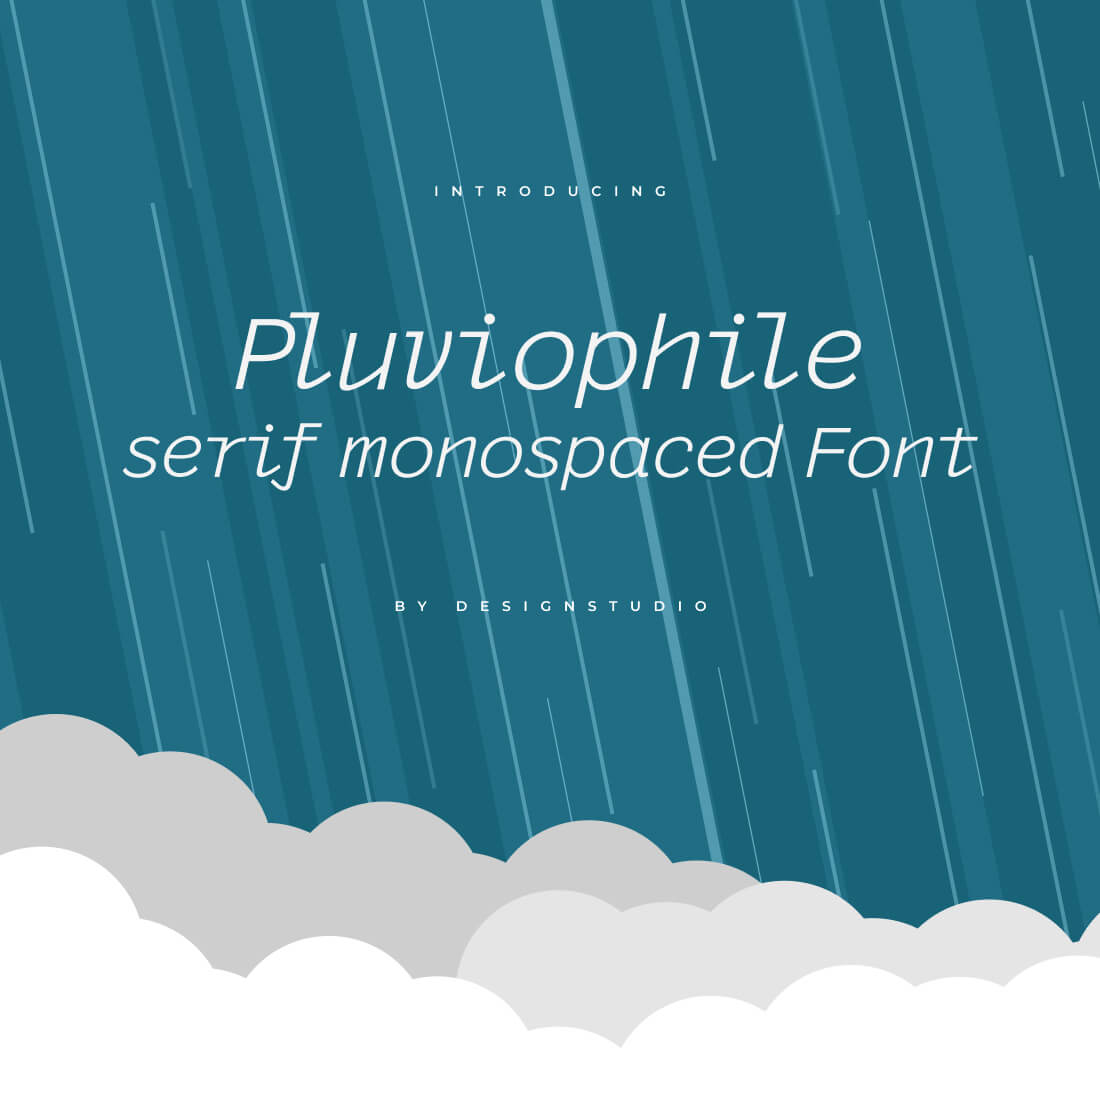 Pluviophile Serif Monospaced Font cover image.